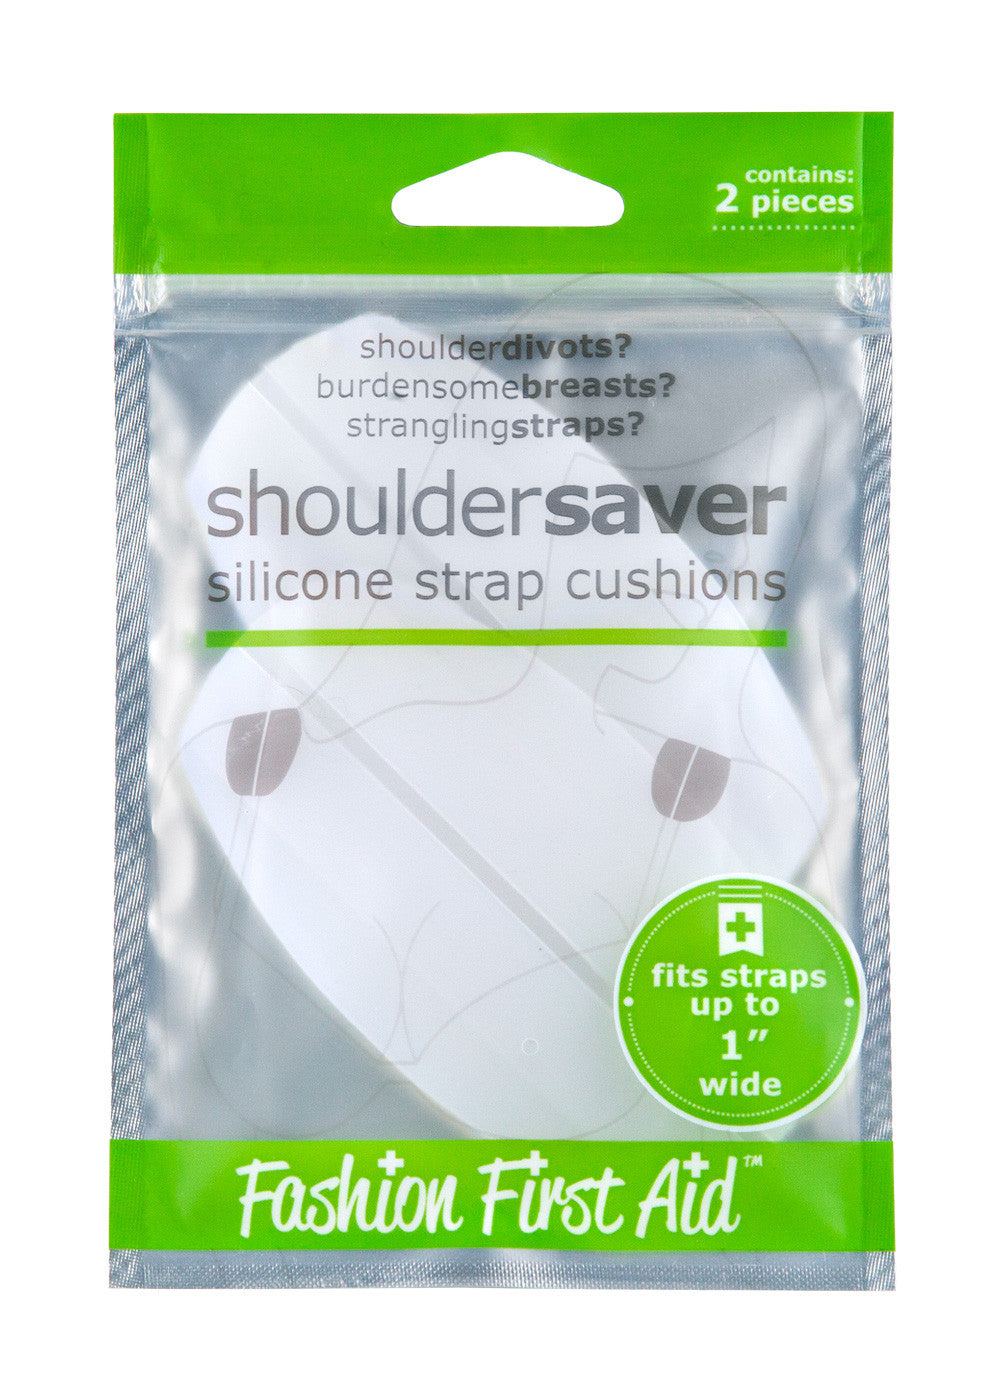 Shoulder Saver: silicone strap cushions